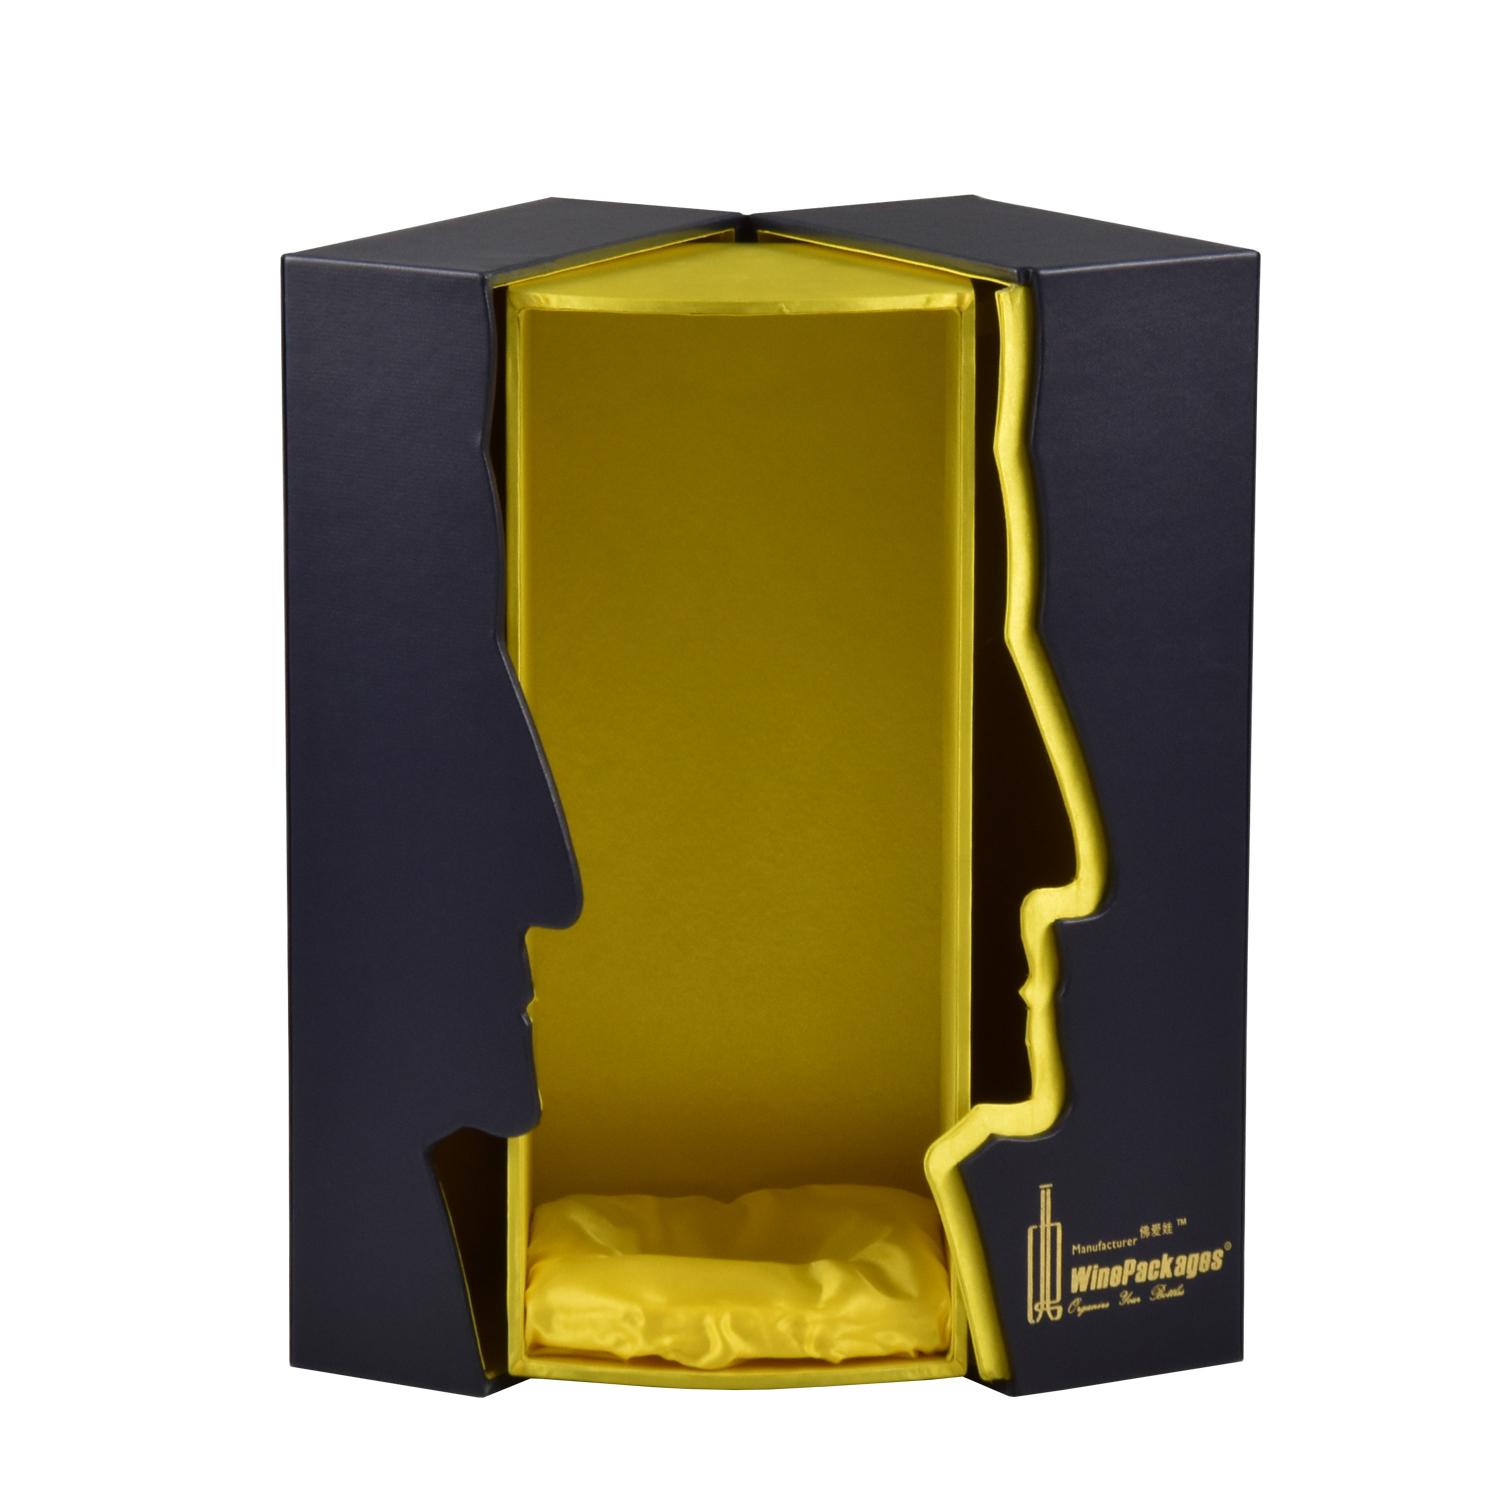 Wine Box Manufacturer PU leather luxury bordeaux wine gift box